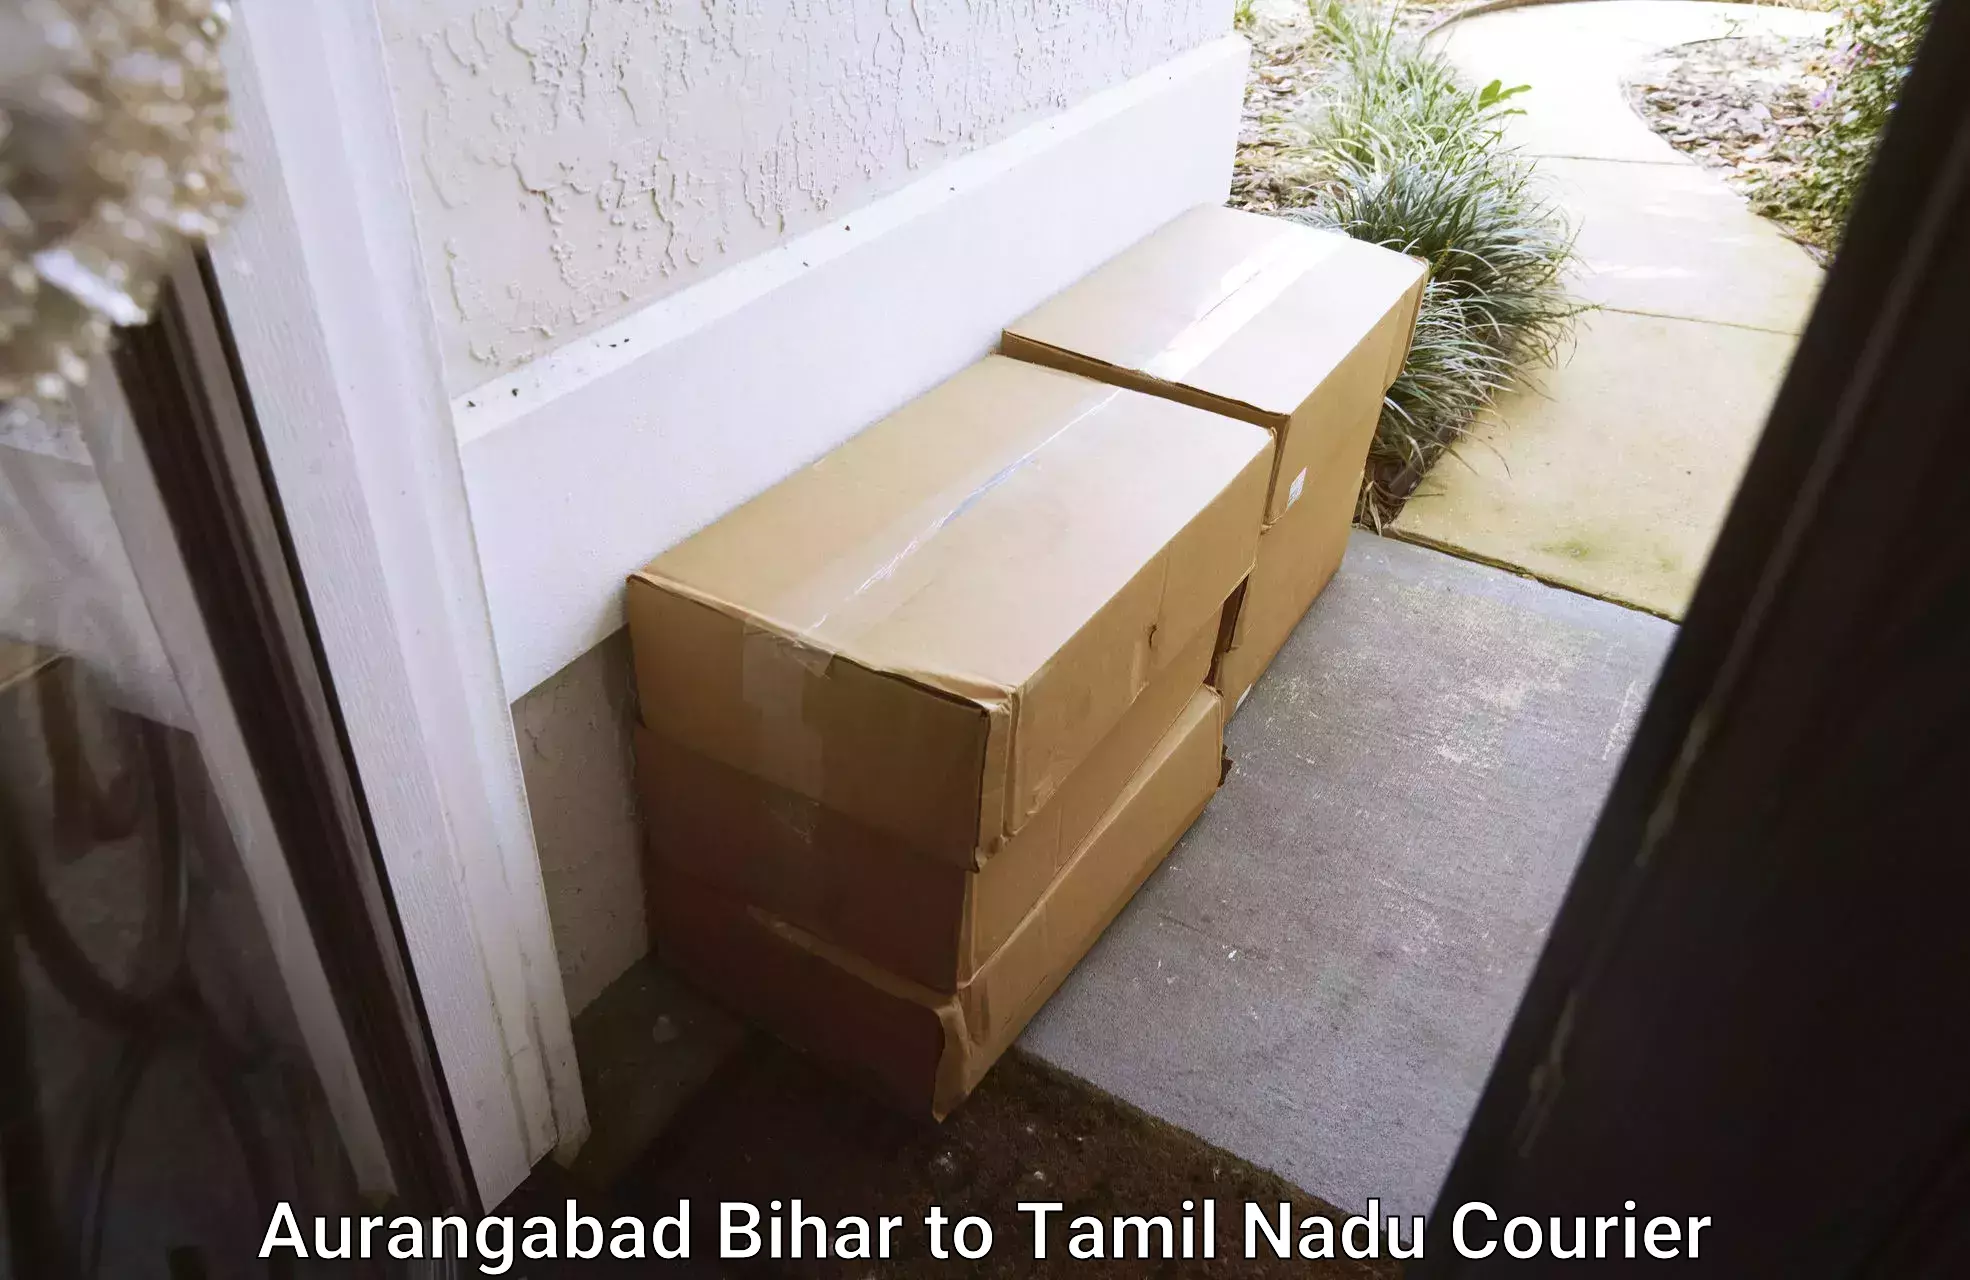 Furniture moving experts Aurangabad Bihar to Valparai